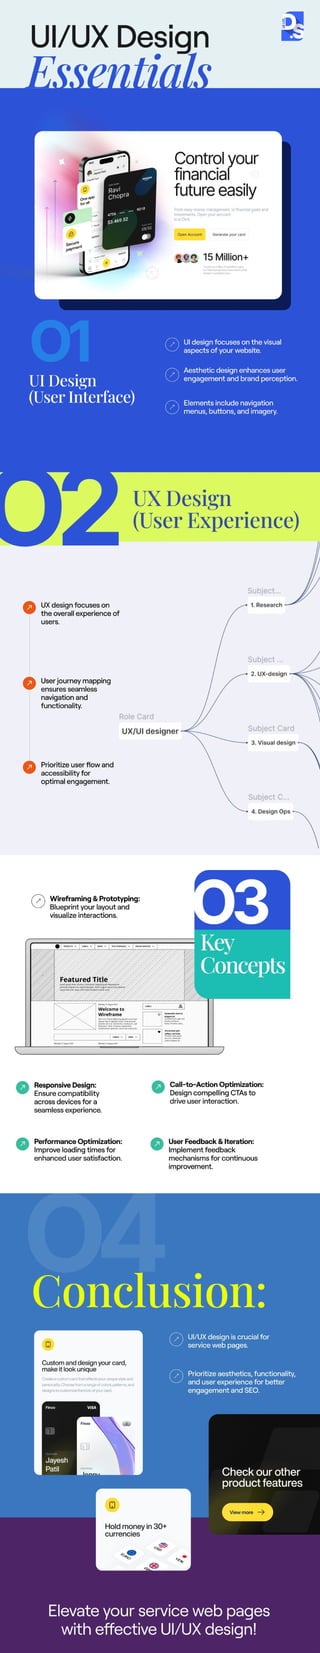 Essential UI/UX Design Principles: A Comprehensive Guide